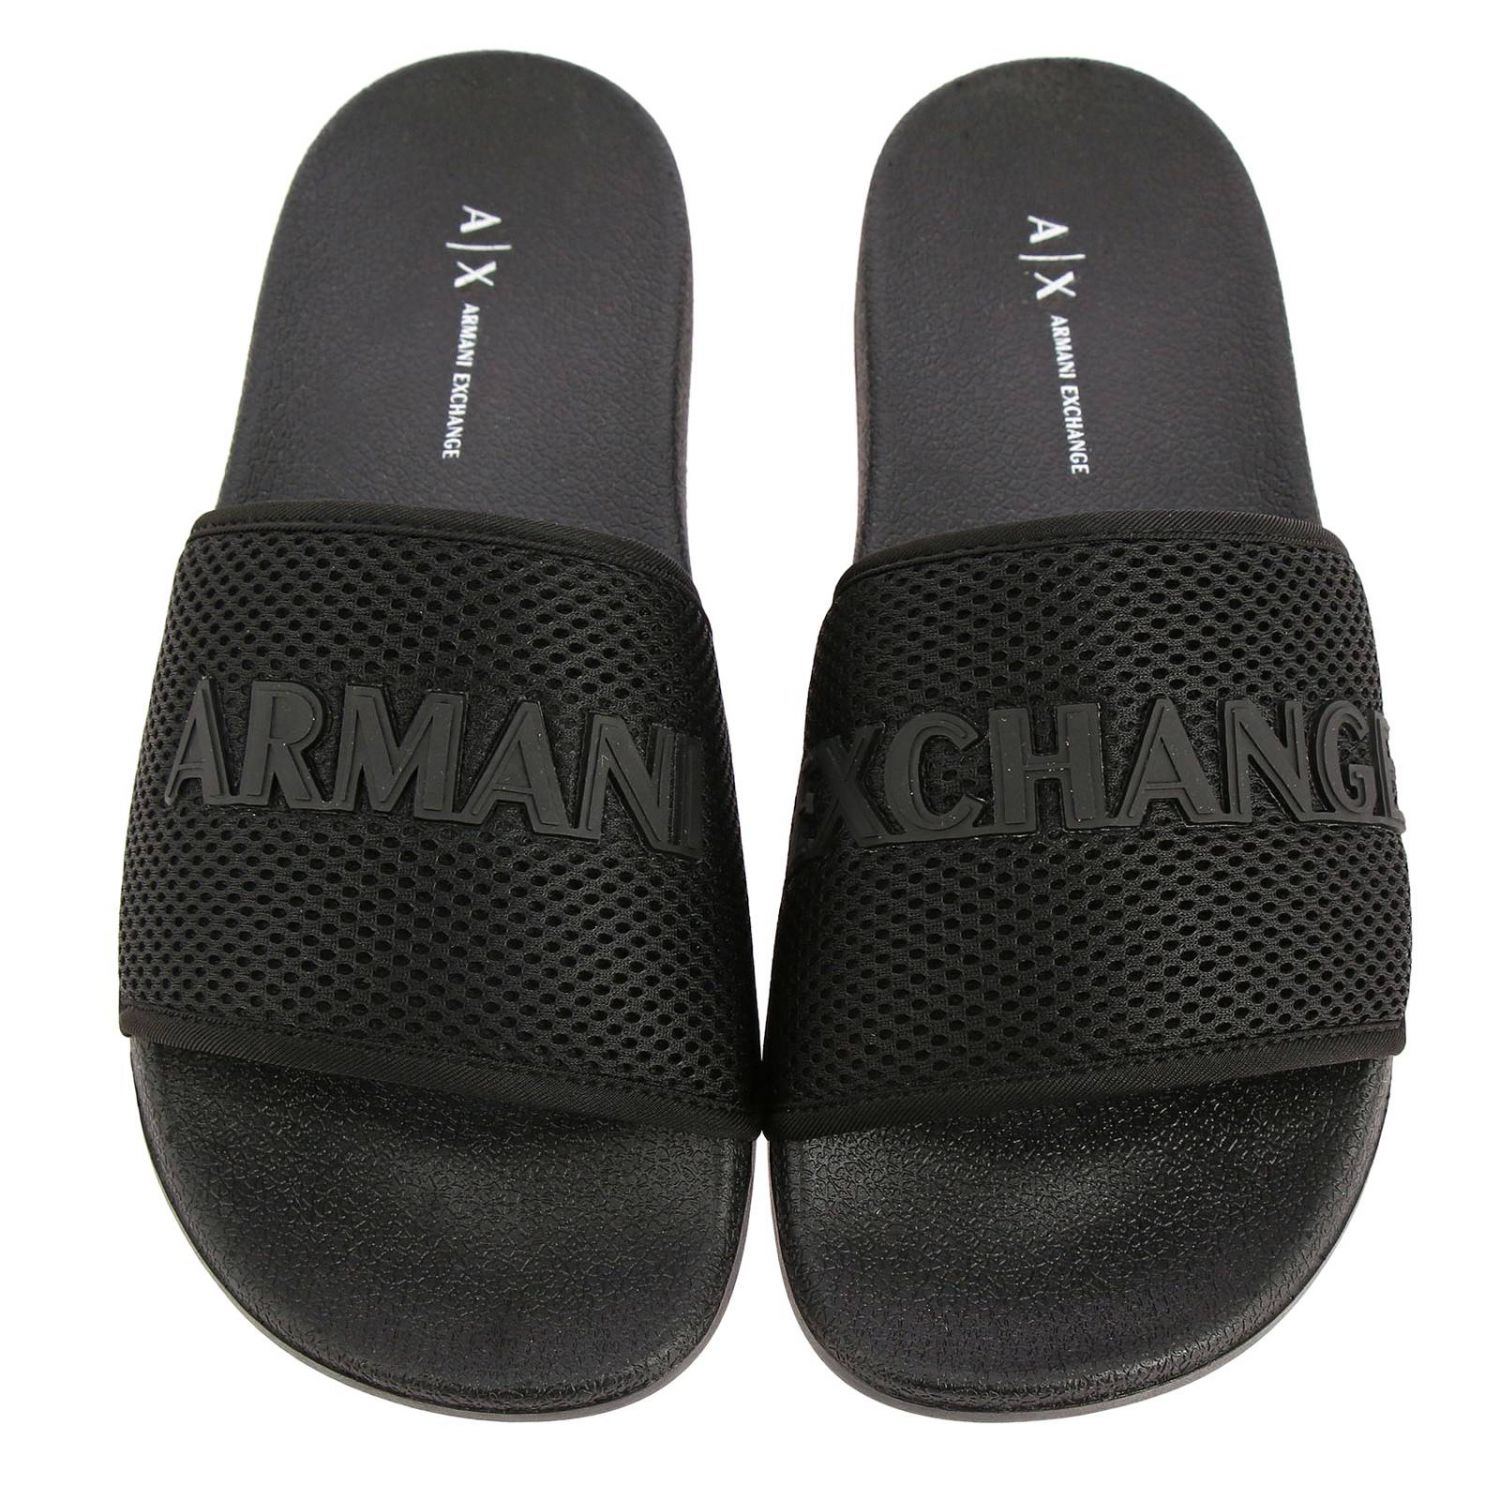 armani exchange slippers